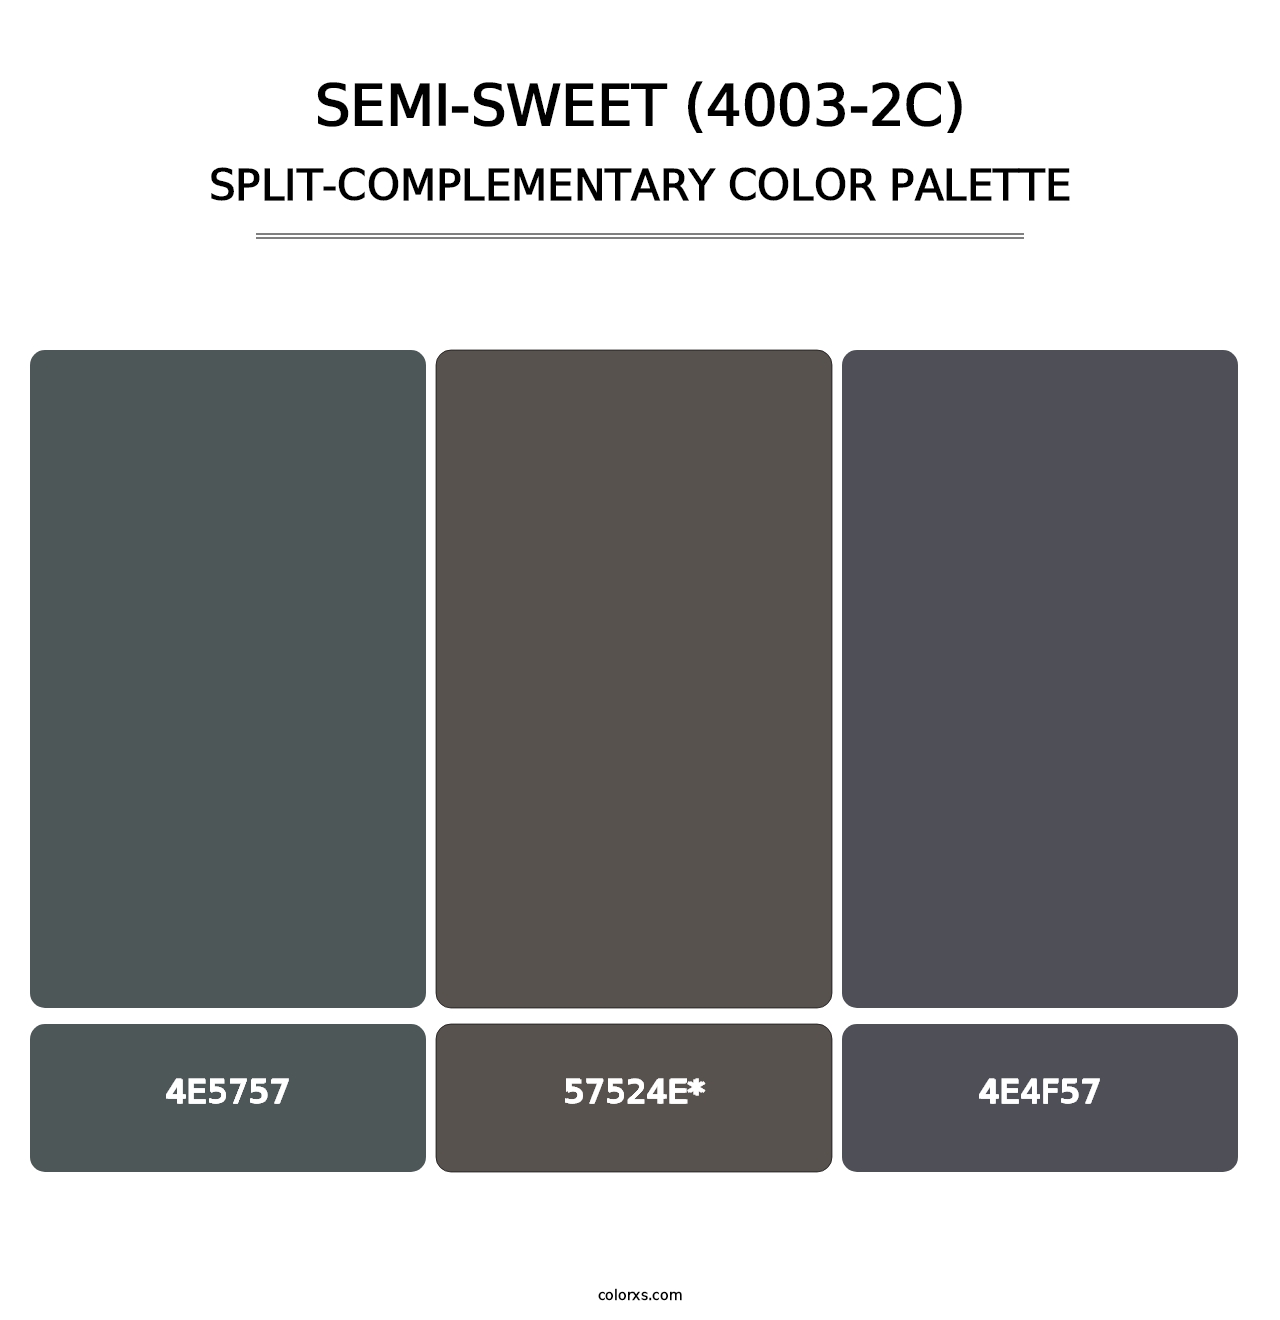 Semi-Sweet (4003-2C) - Split-Complementary Color Palette